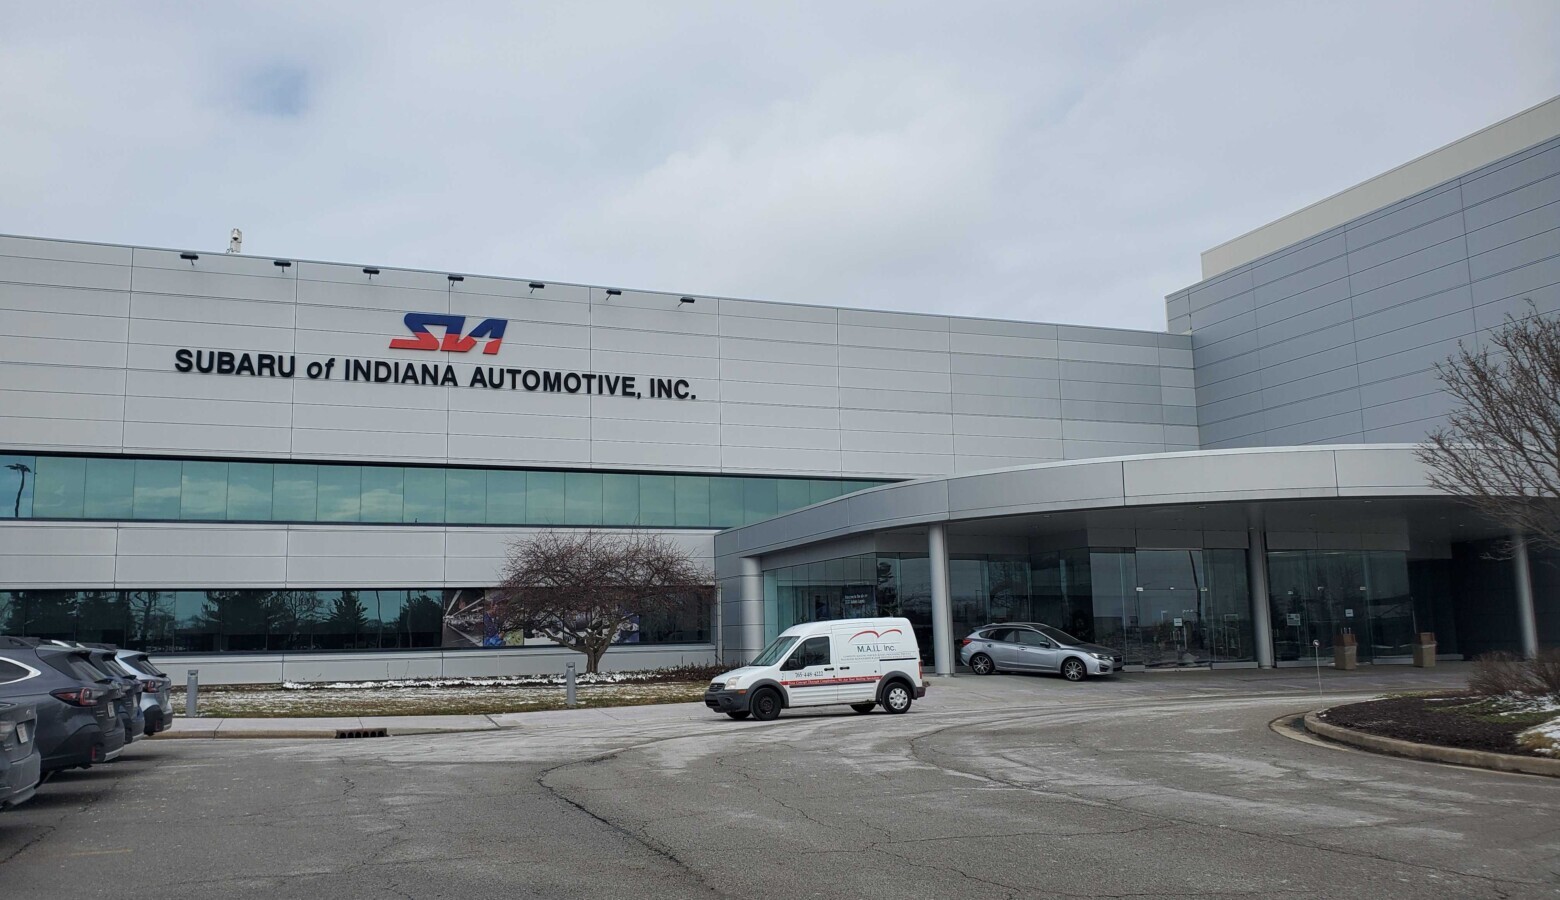 Subaru of Indiana Automotive facility in Lafayette's main entrance. (Samantha Horton/IPB News)